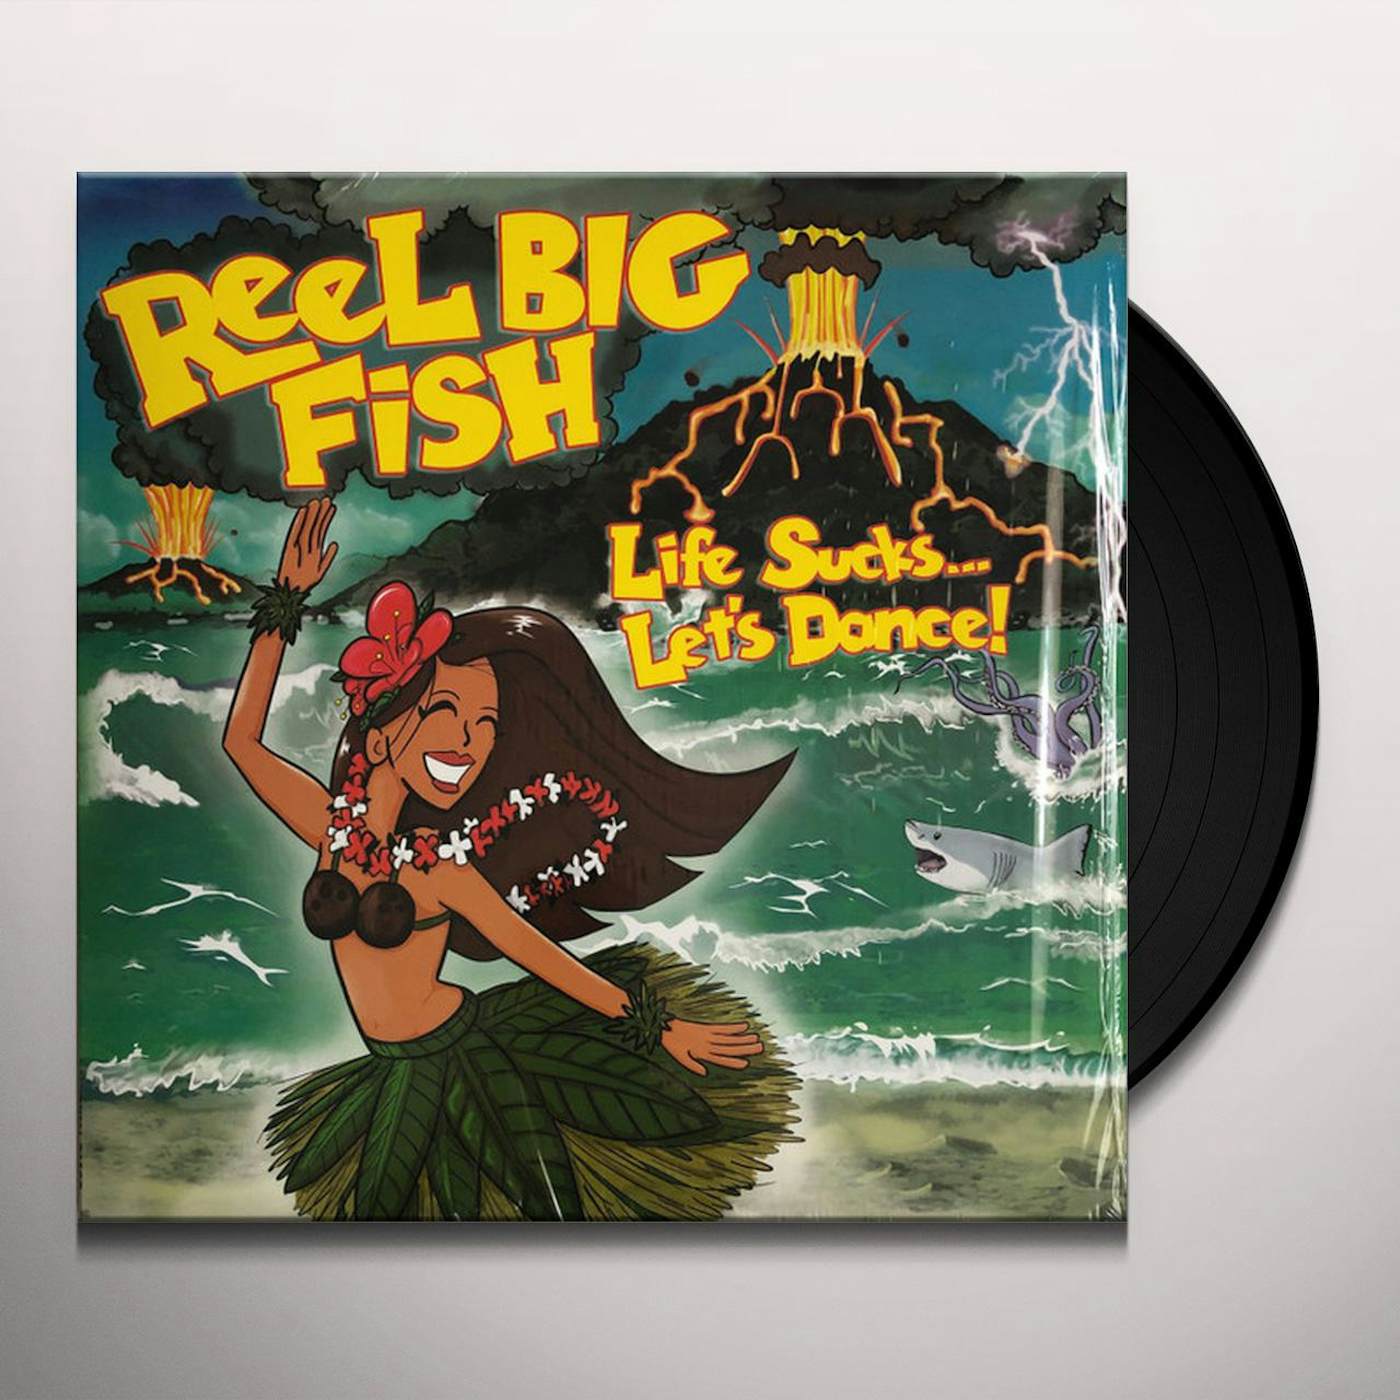 Reel Big Fish Shirts, Reel Big Fish Merch, Reel Big Fish Hoodies, Reel Big  Fish Vinyl Records, Reel Big Fish Posters, Reel Big Fish Hats, Reel Big  Fish CDs, Reel Big Fish